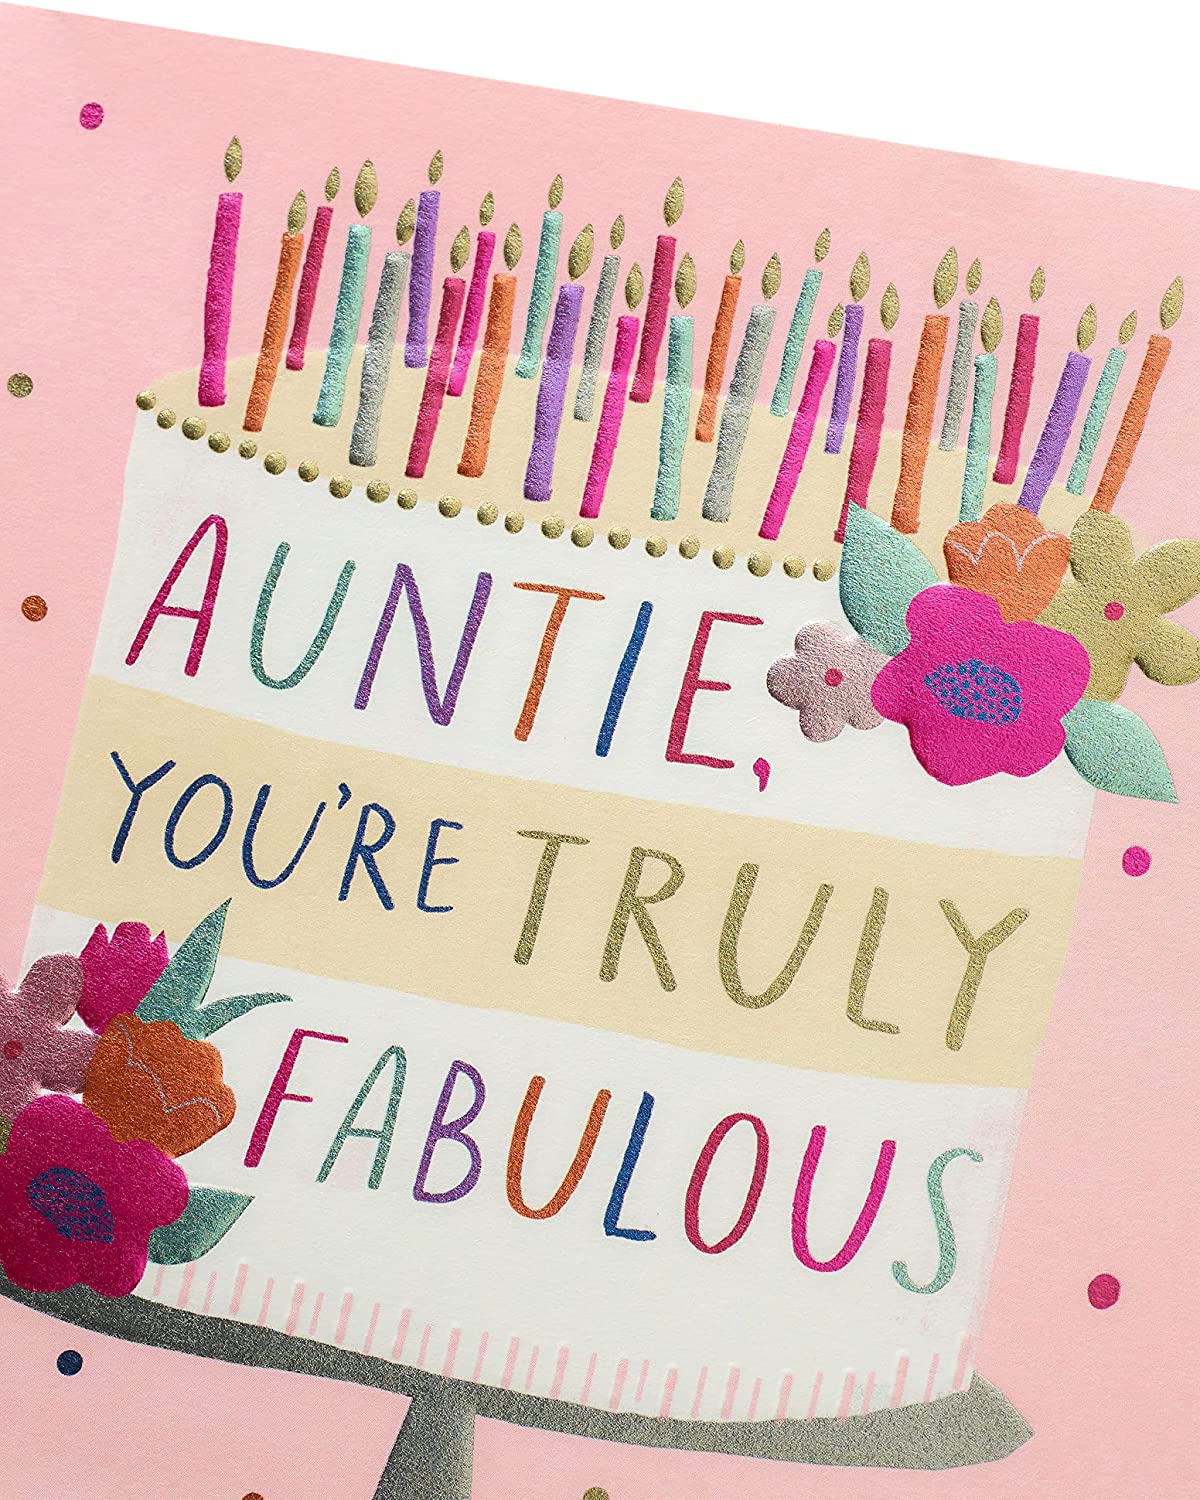 Fabulous Auntie Birthday Card